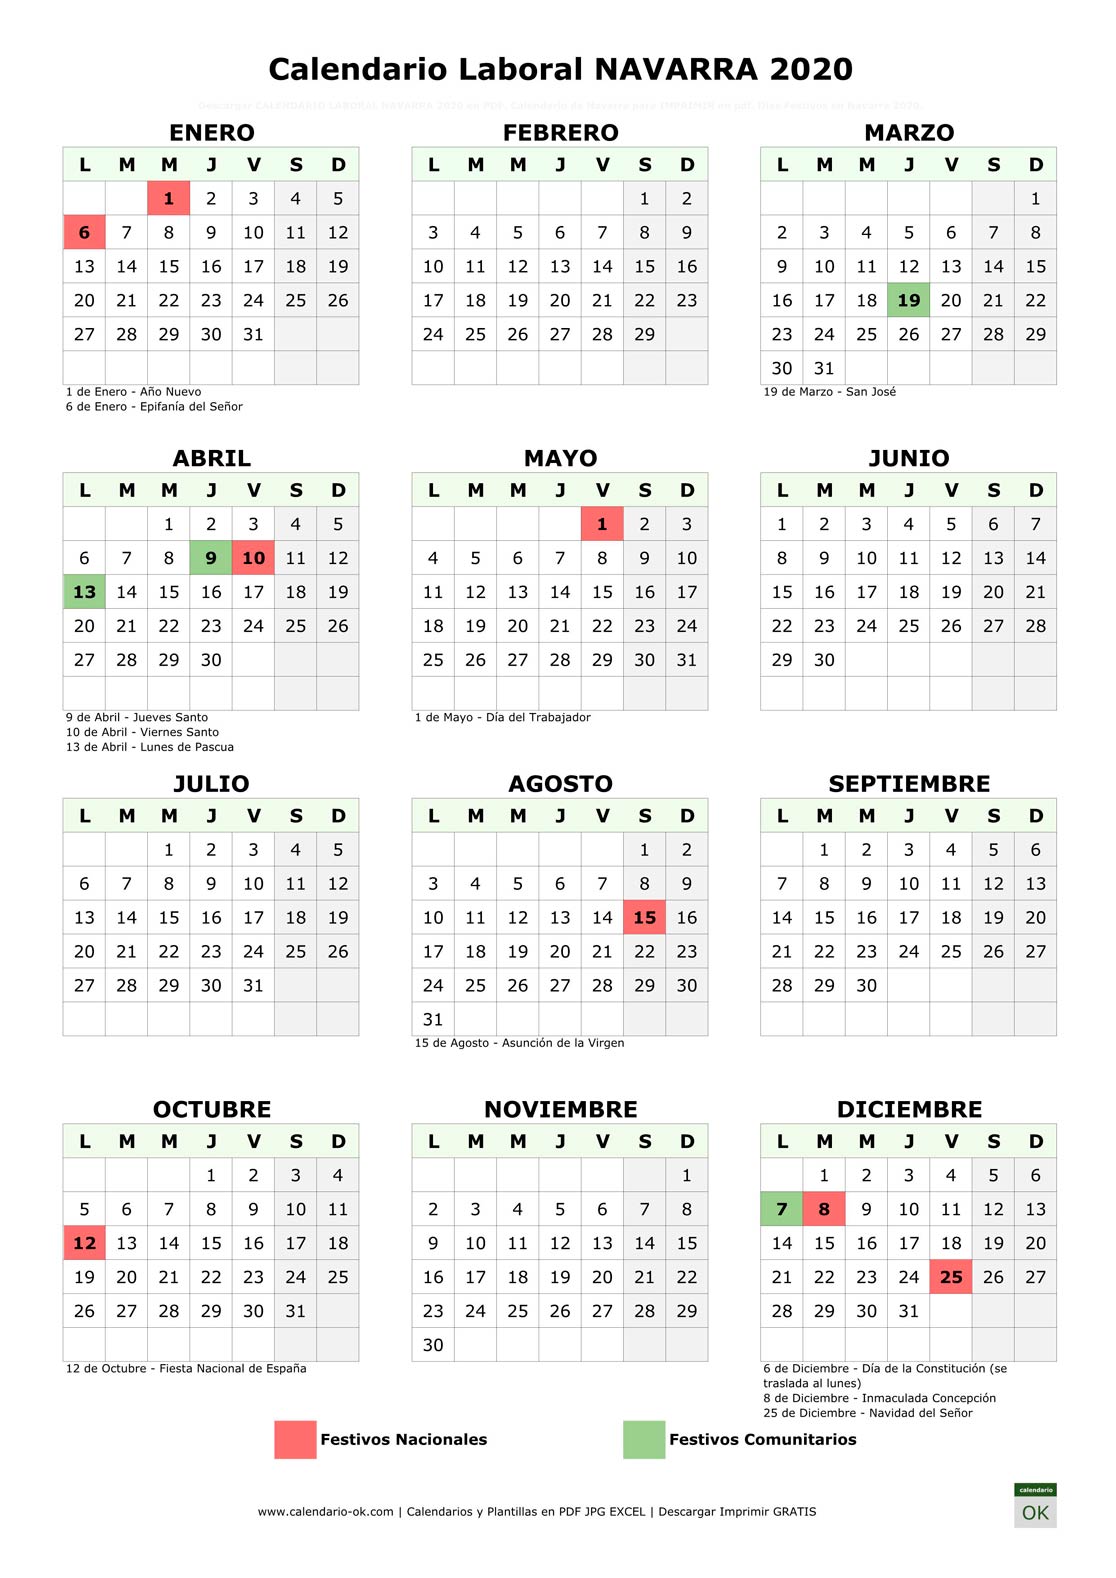 Calendario Laboral NAVARRA 2020